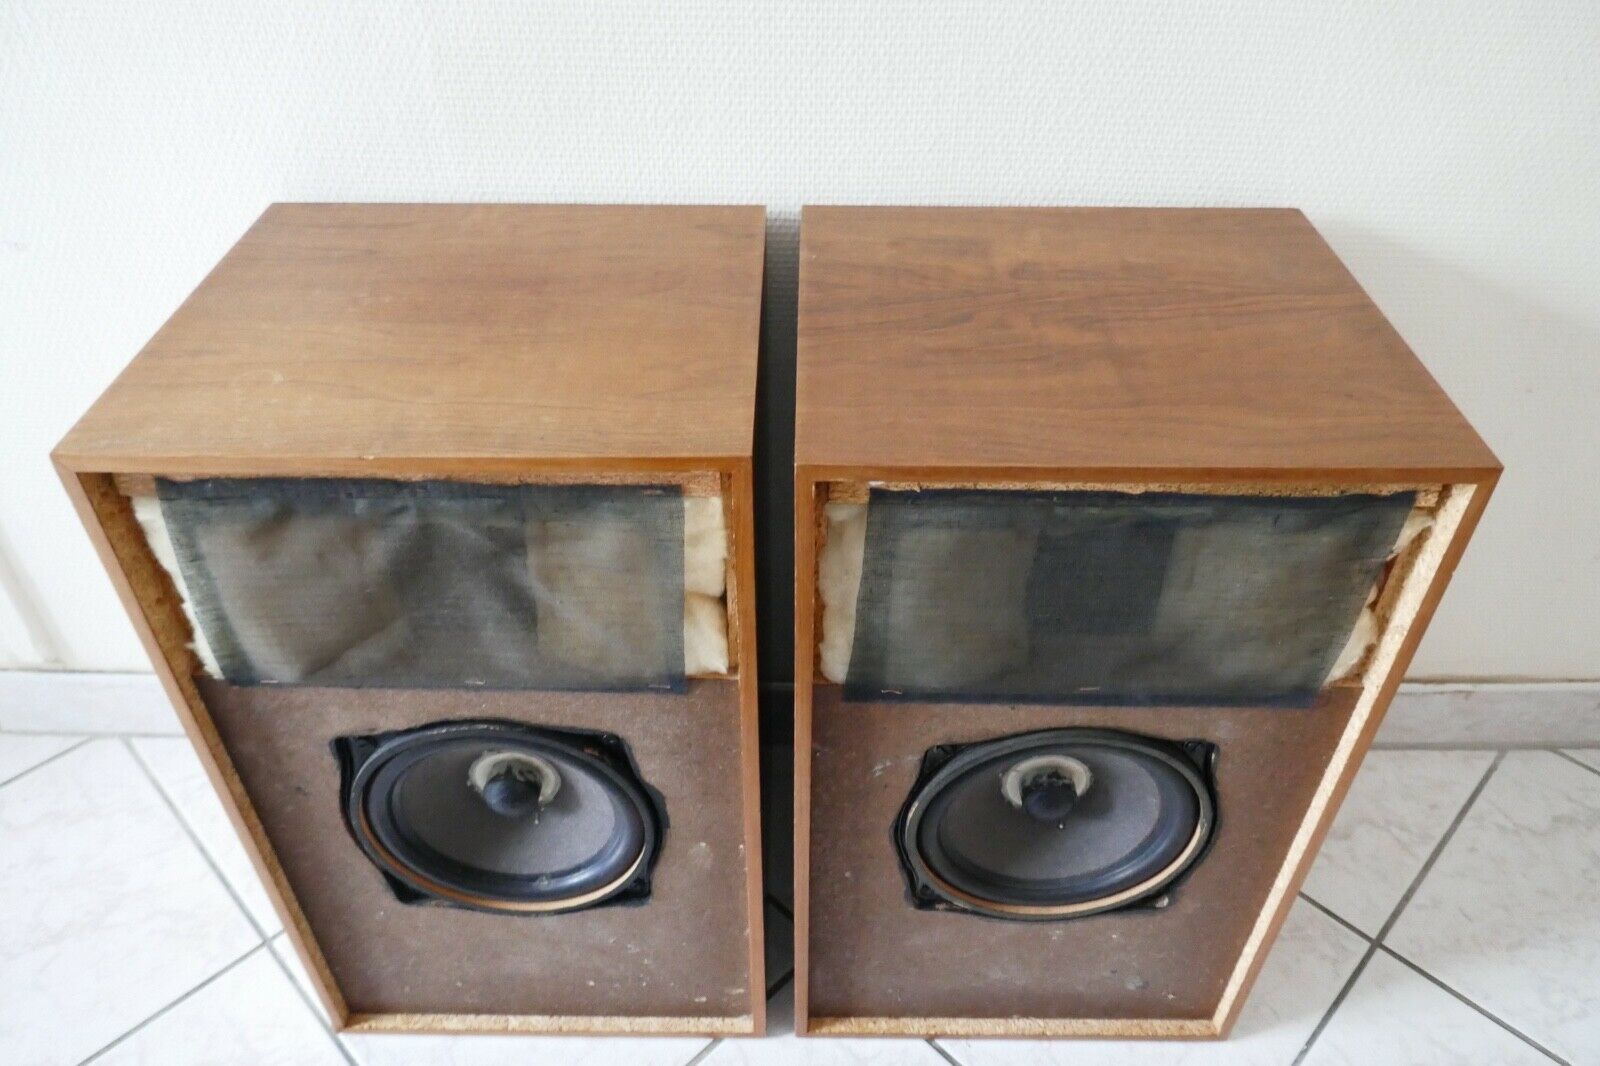 enceintes speakers jean marie reynaud pastourelle vintage occasion